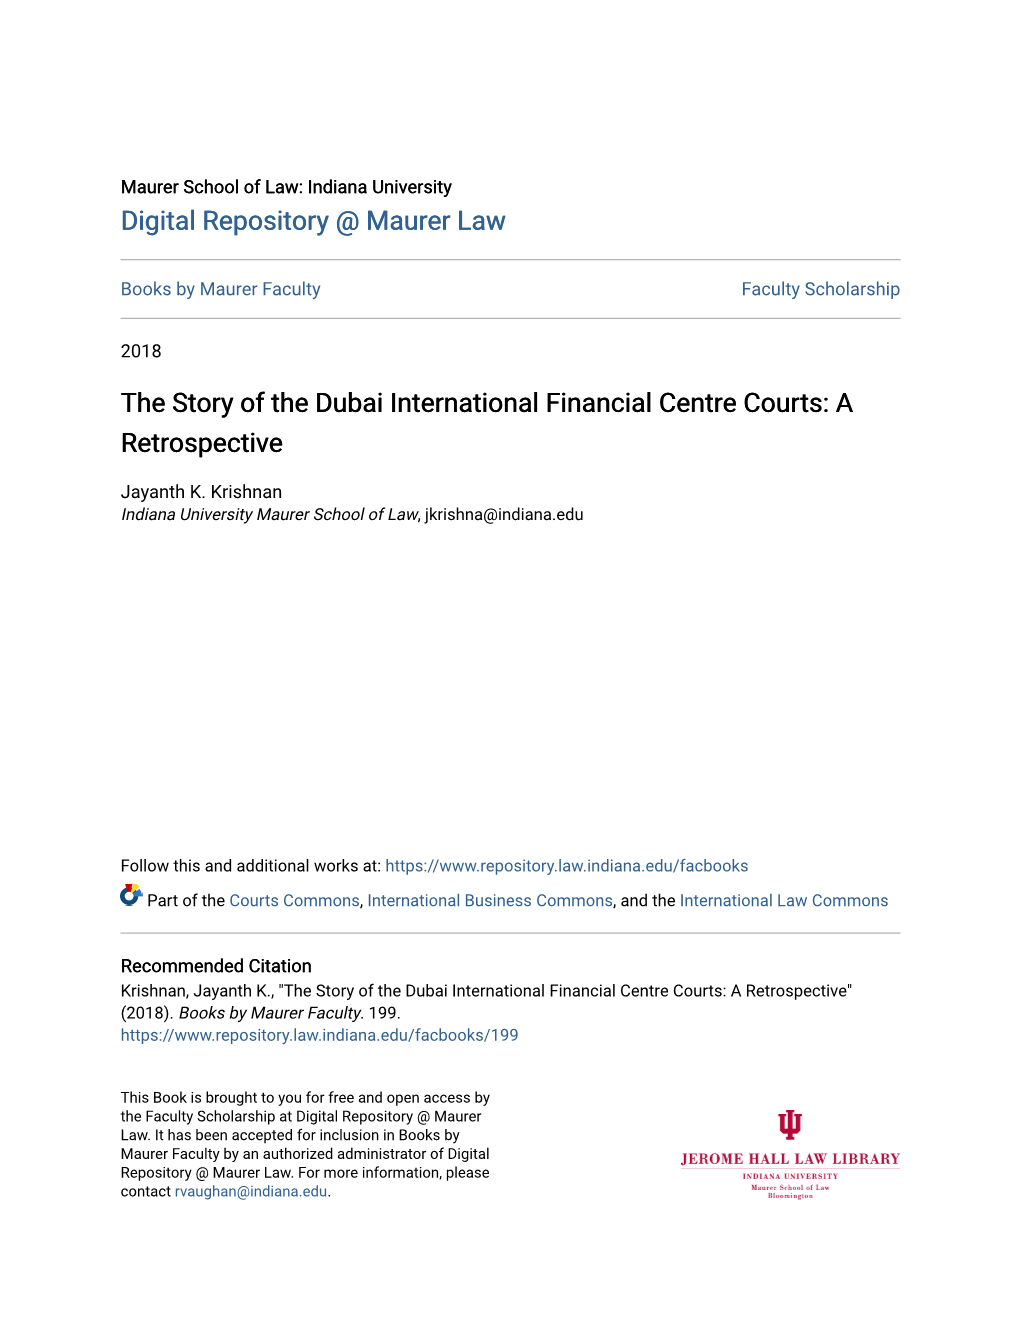 The Story of the Dubai International Financial Centre Courts: a Retrospective